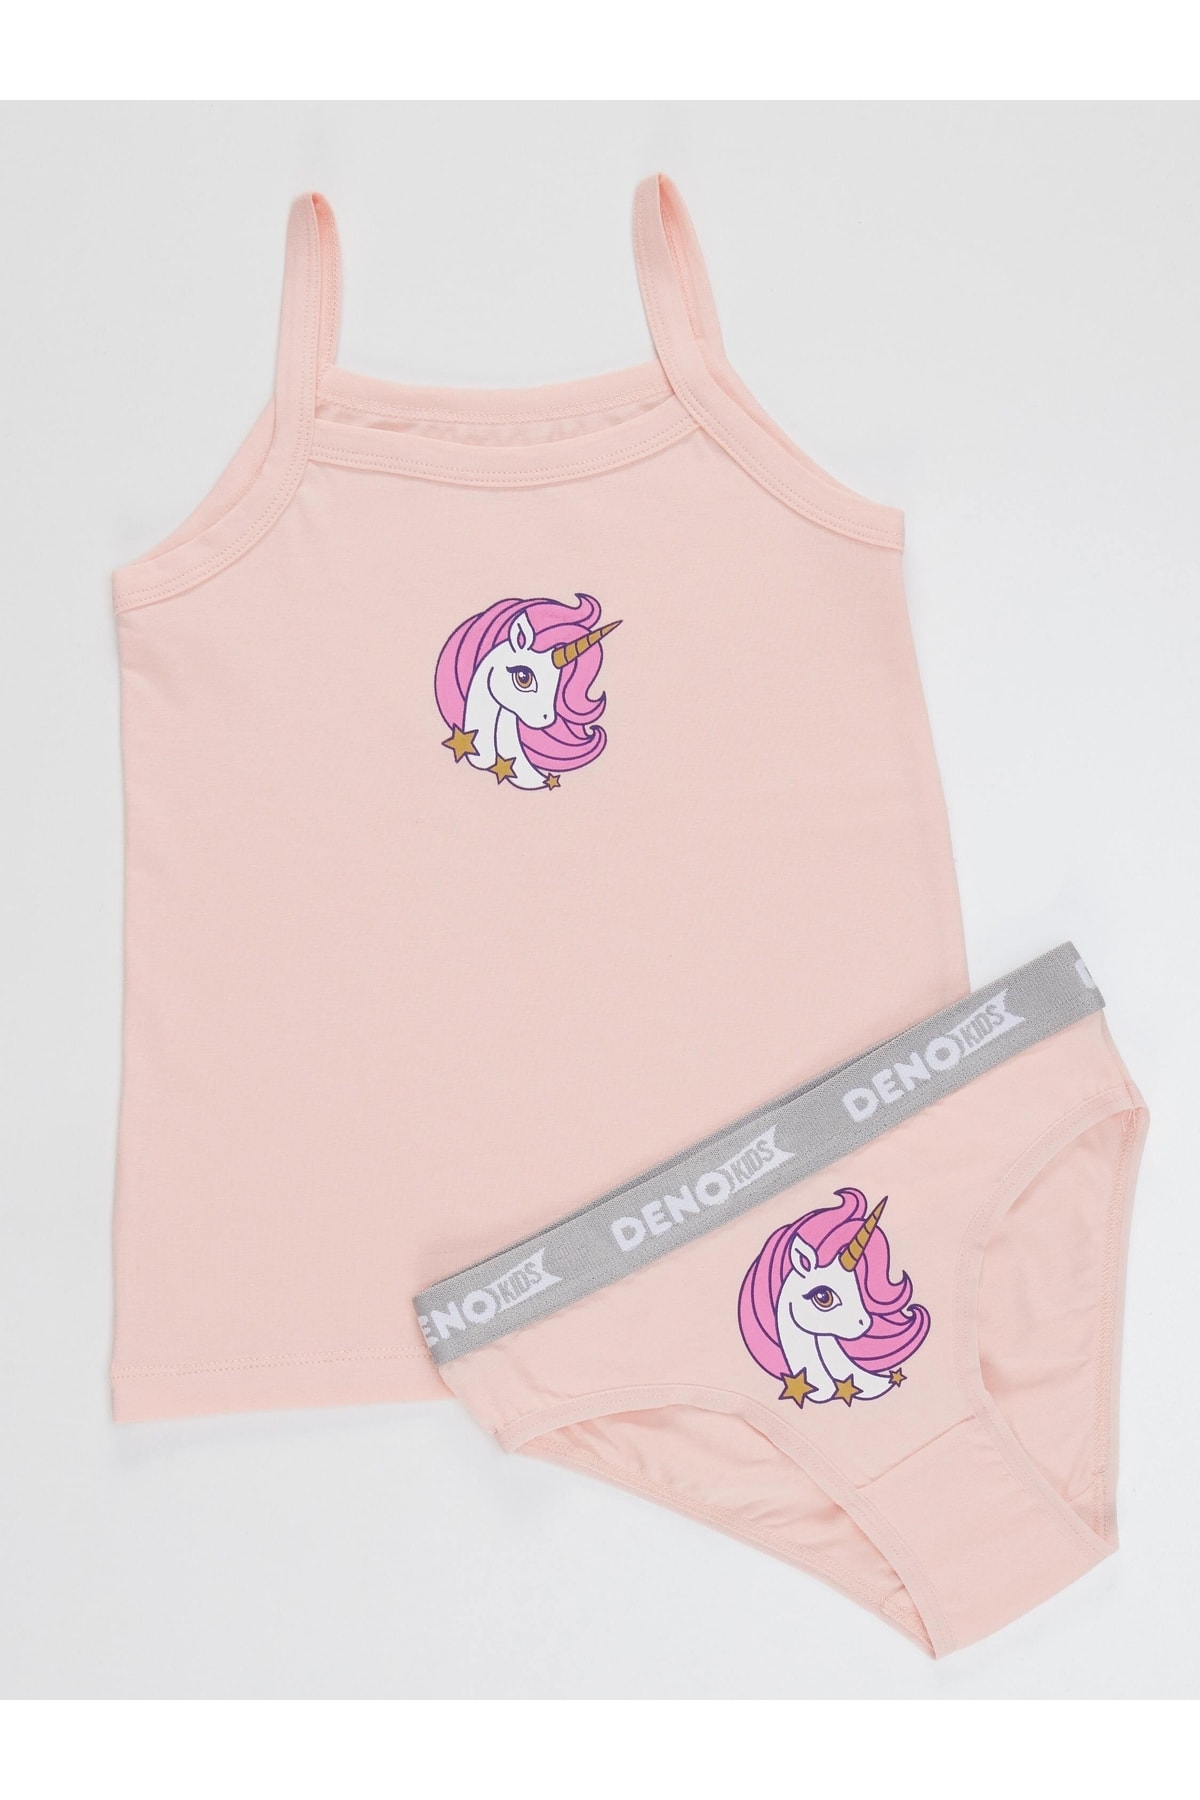 Denokids Unicorn Girl Child Pink Singlets With Panties Set